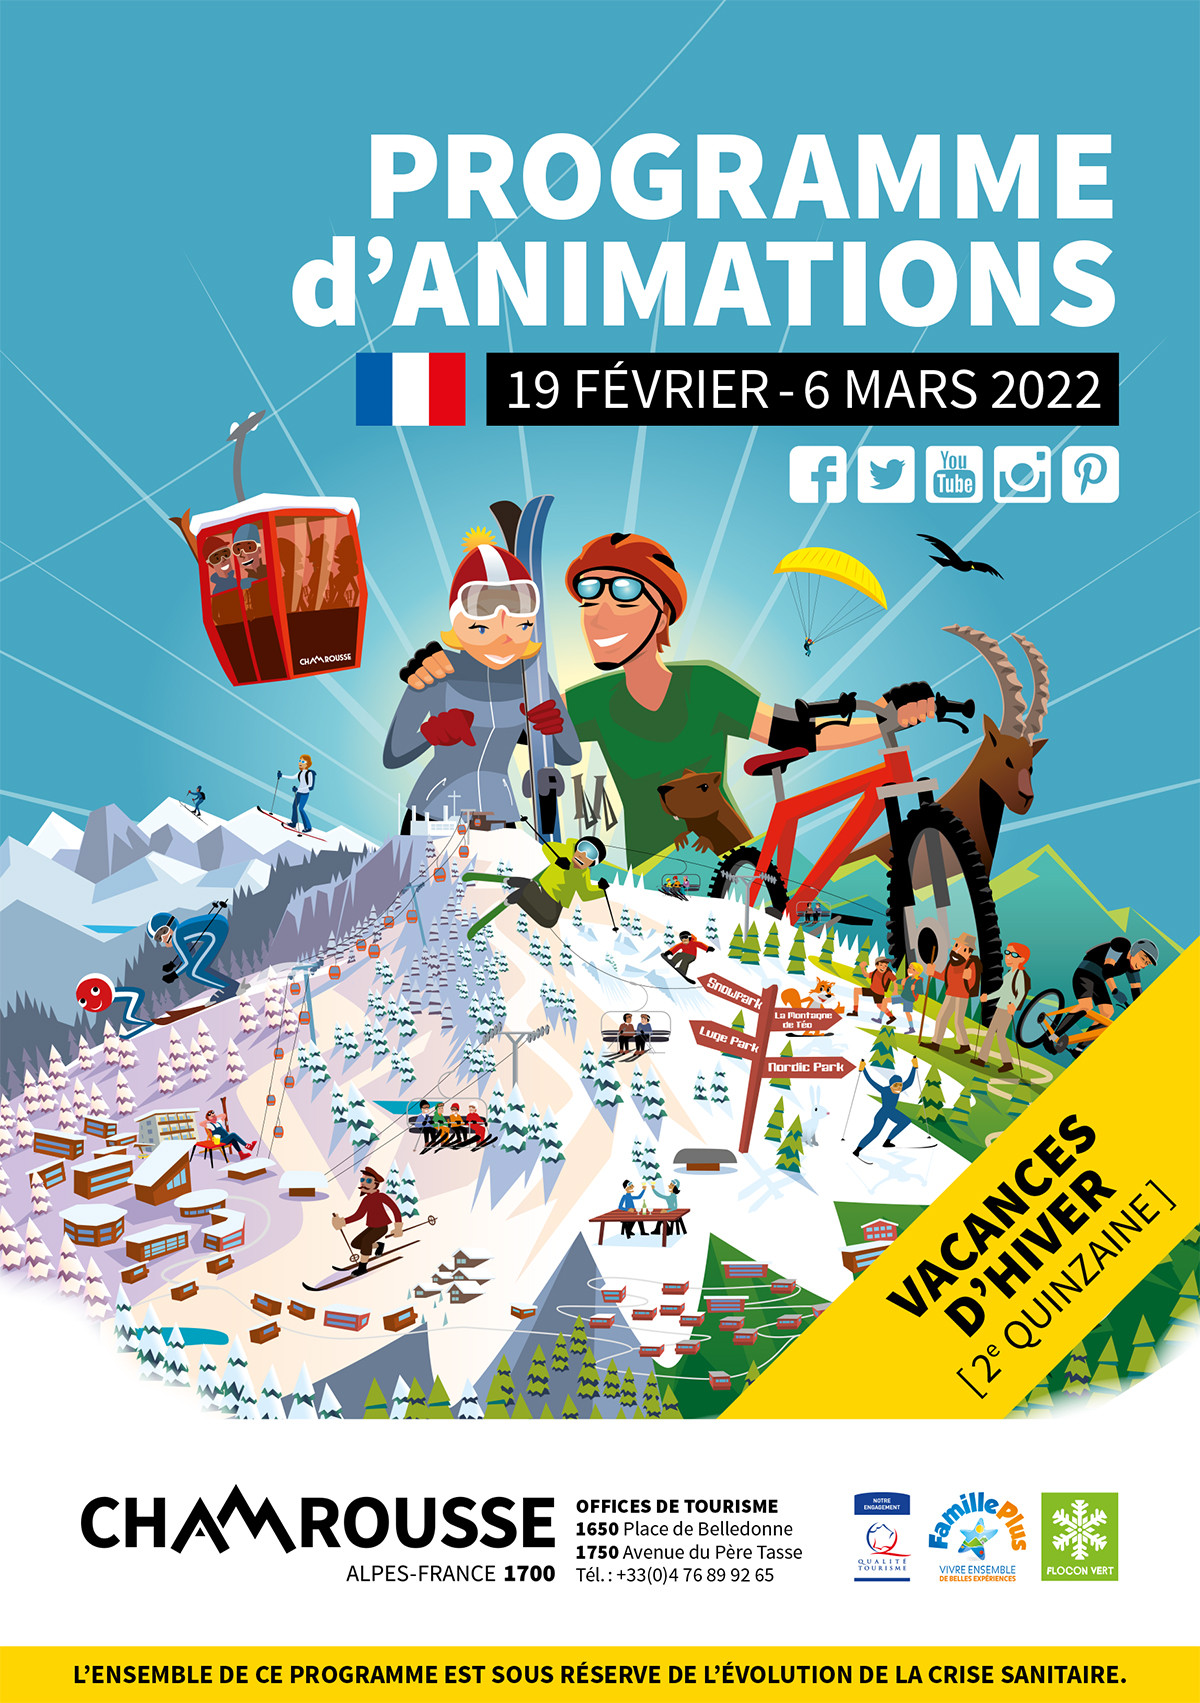 Chamrousse programme animation événement février mars 2022 station ski montagne isère alpes france